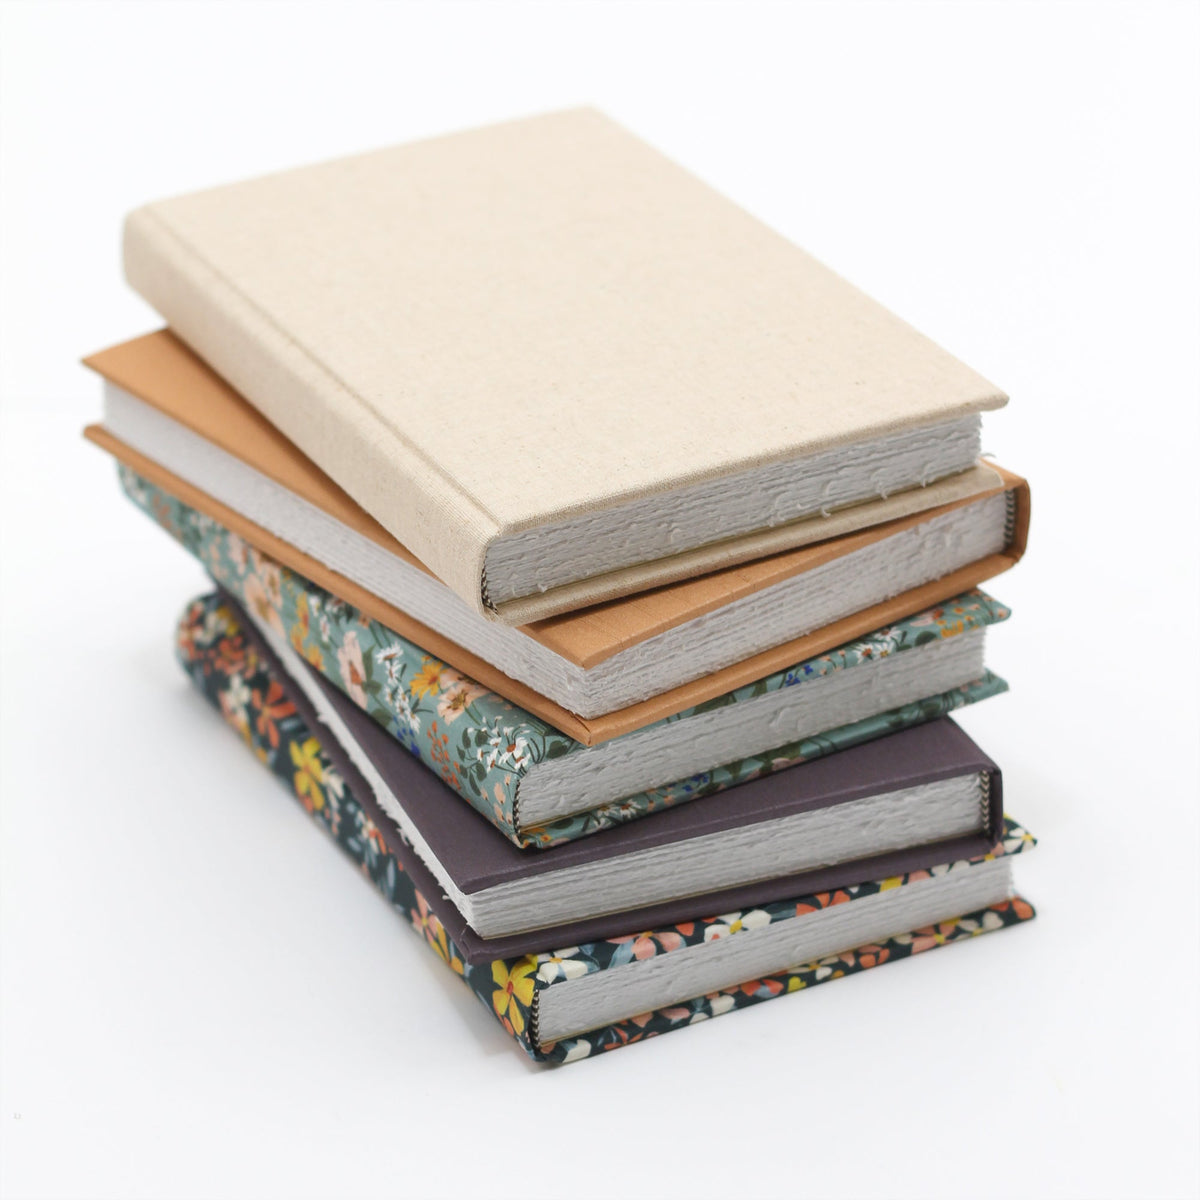 Medium Blank Page Journal with Garnet Silk Cover